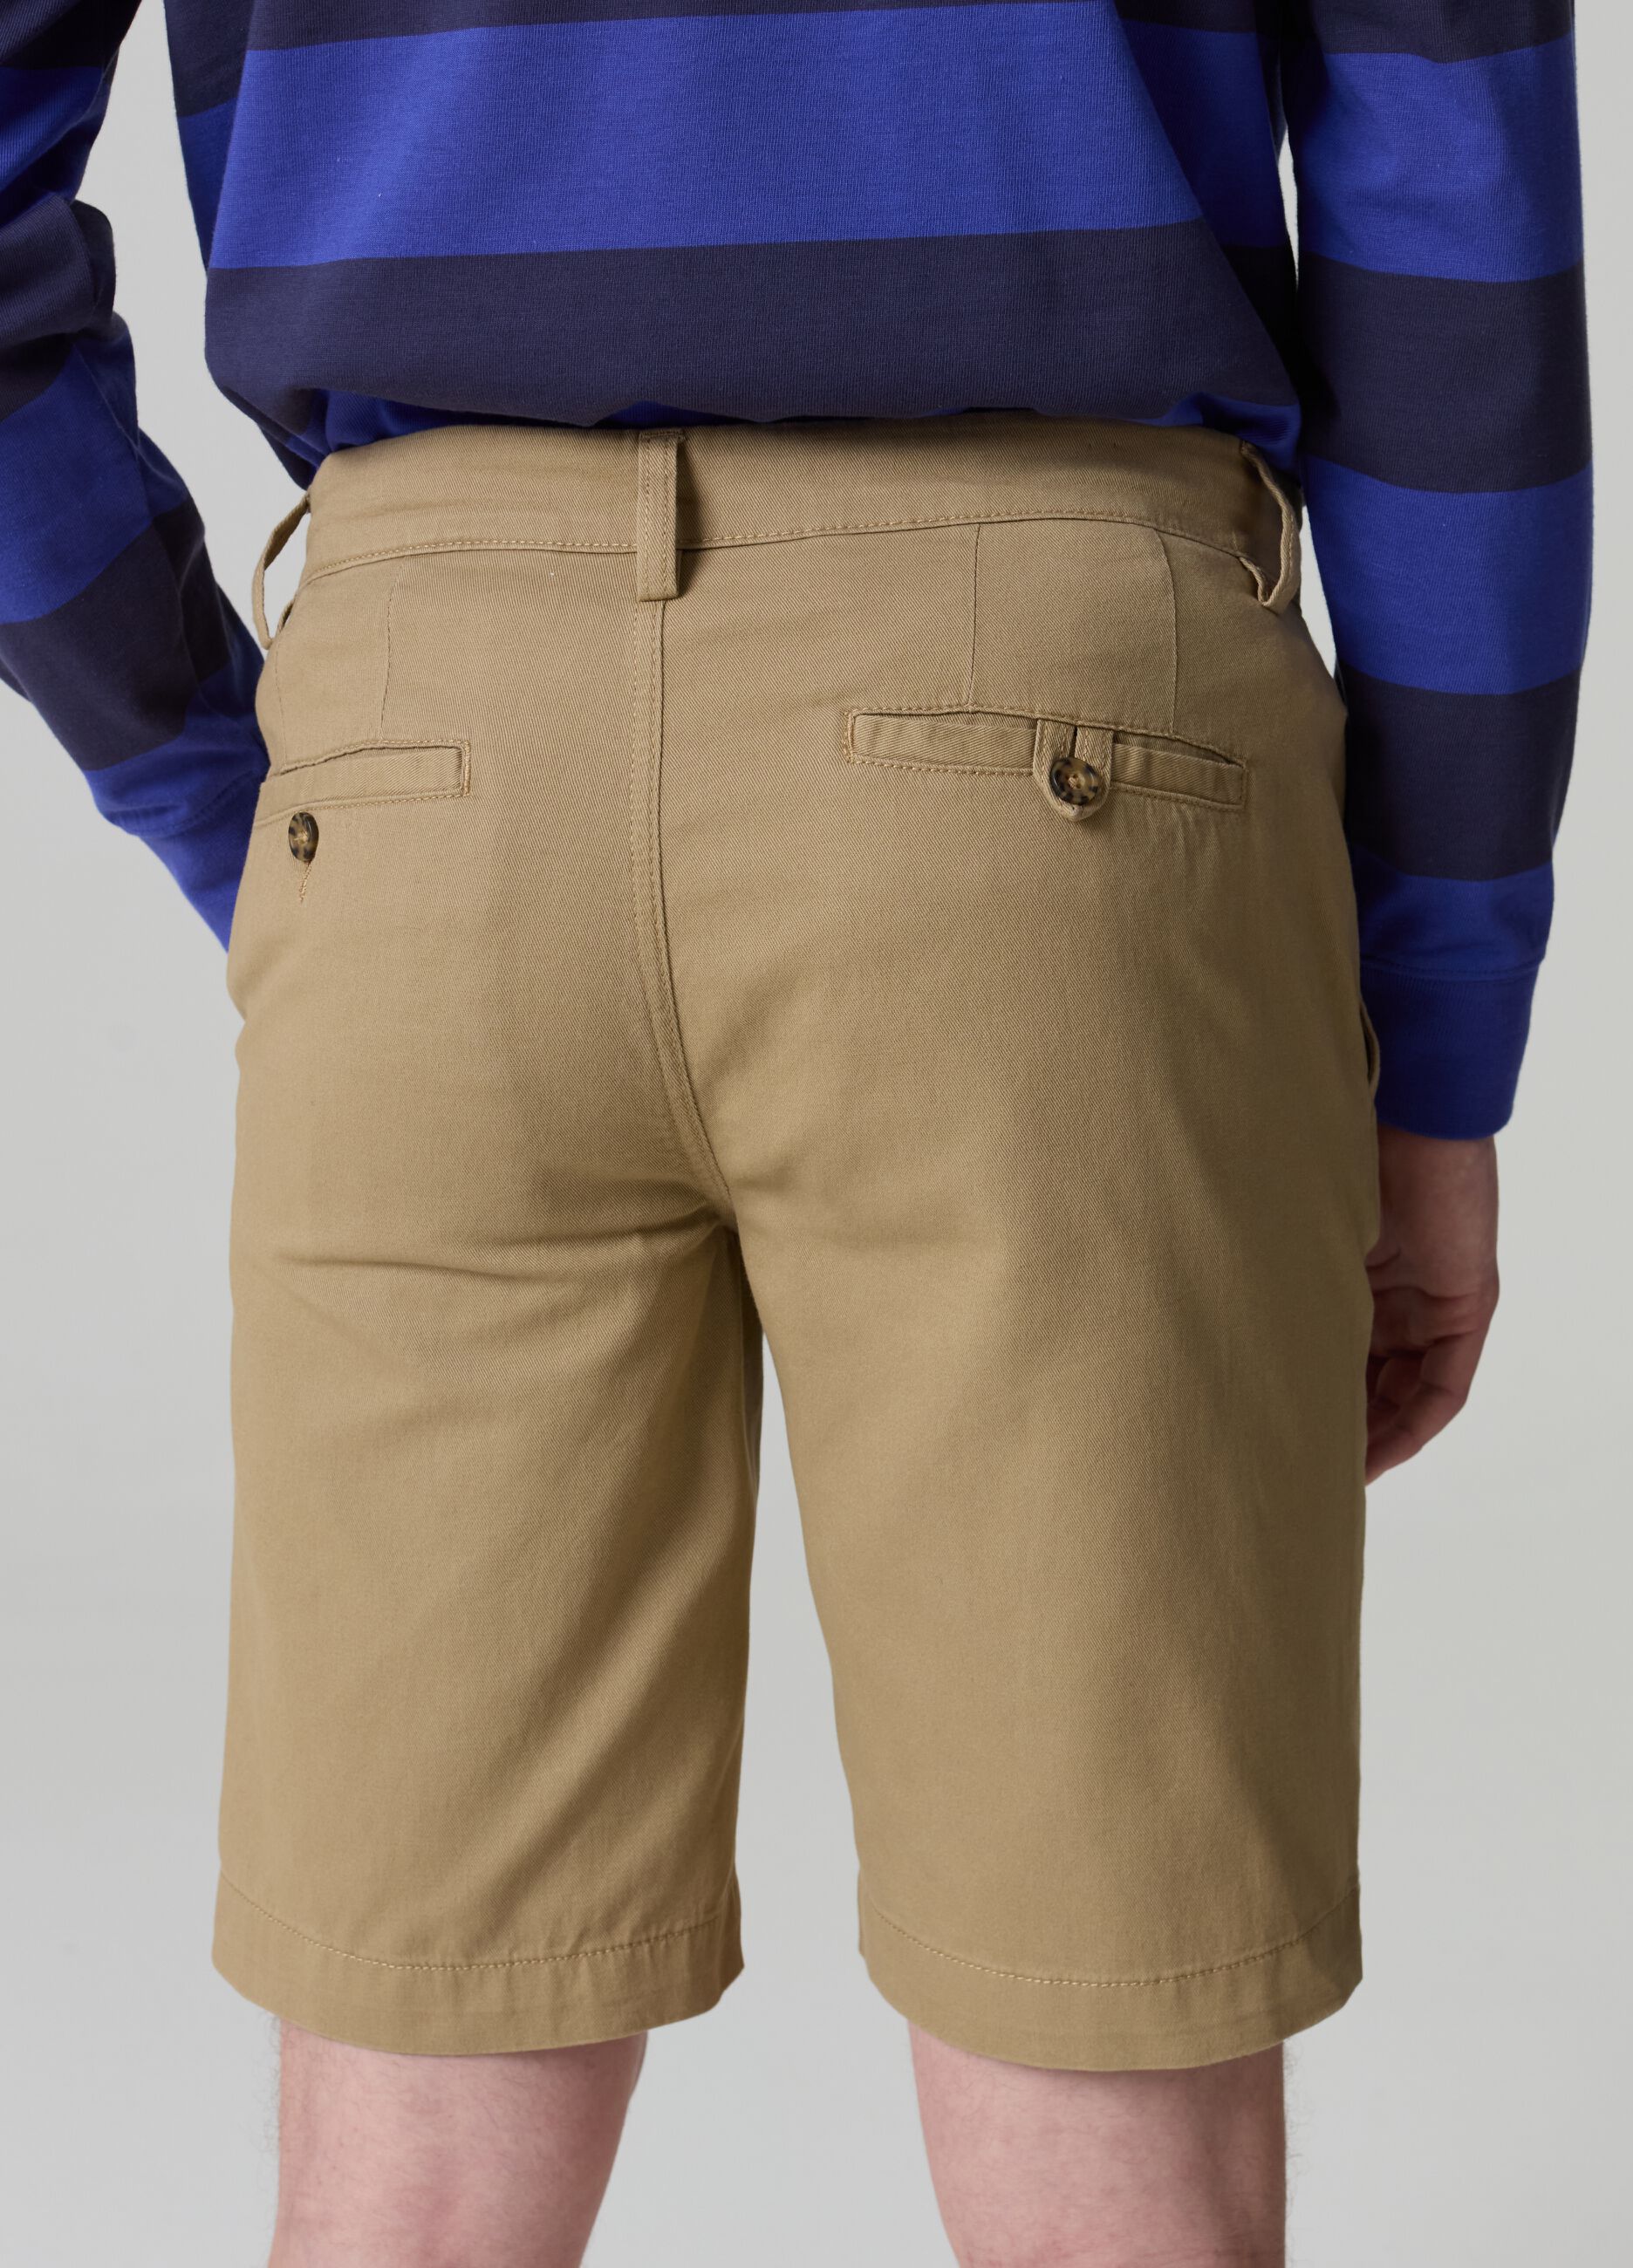 Chino Bermuda shorts in cotton